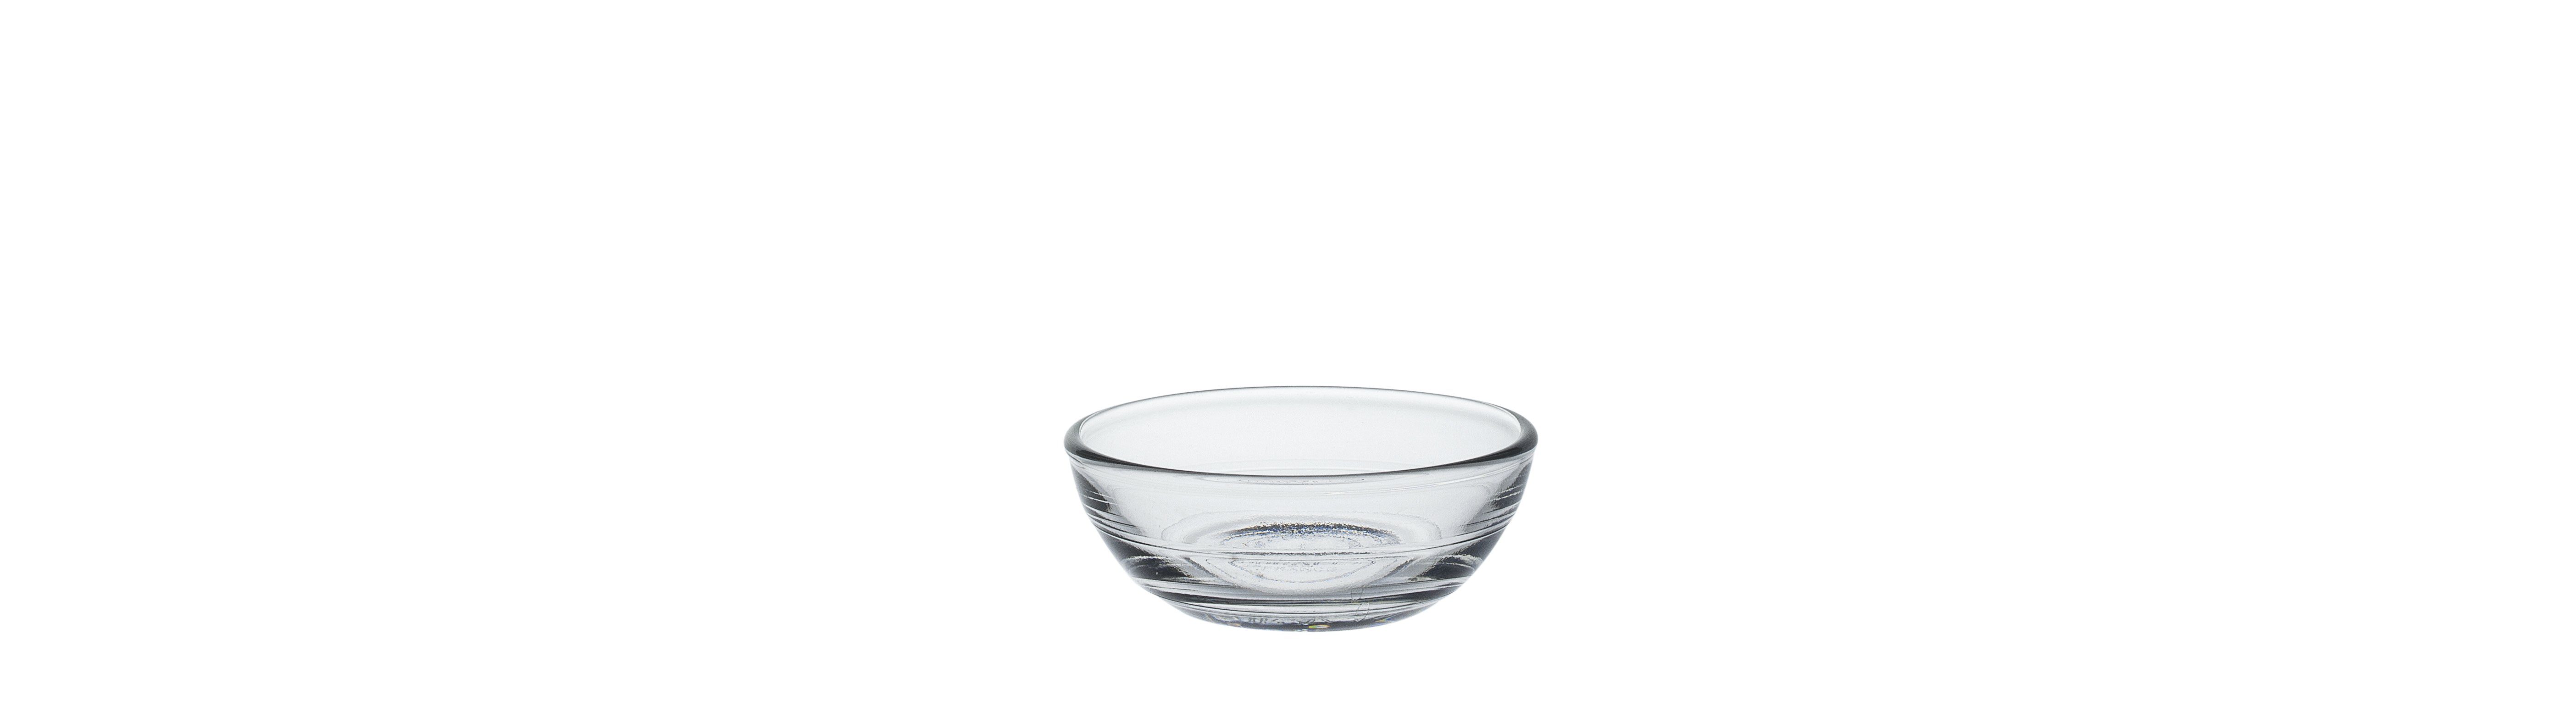 Duralex Salatschüssel Lys Bol, Glas, Schale Salatschale Schüssel 6cm 35ml Glas transparent 4 Stück | Salatschüsseln